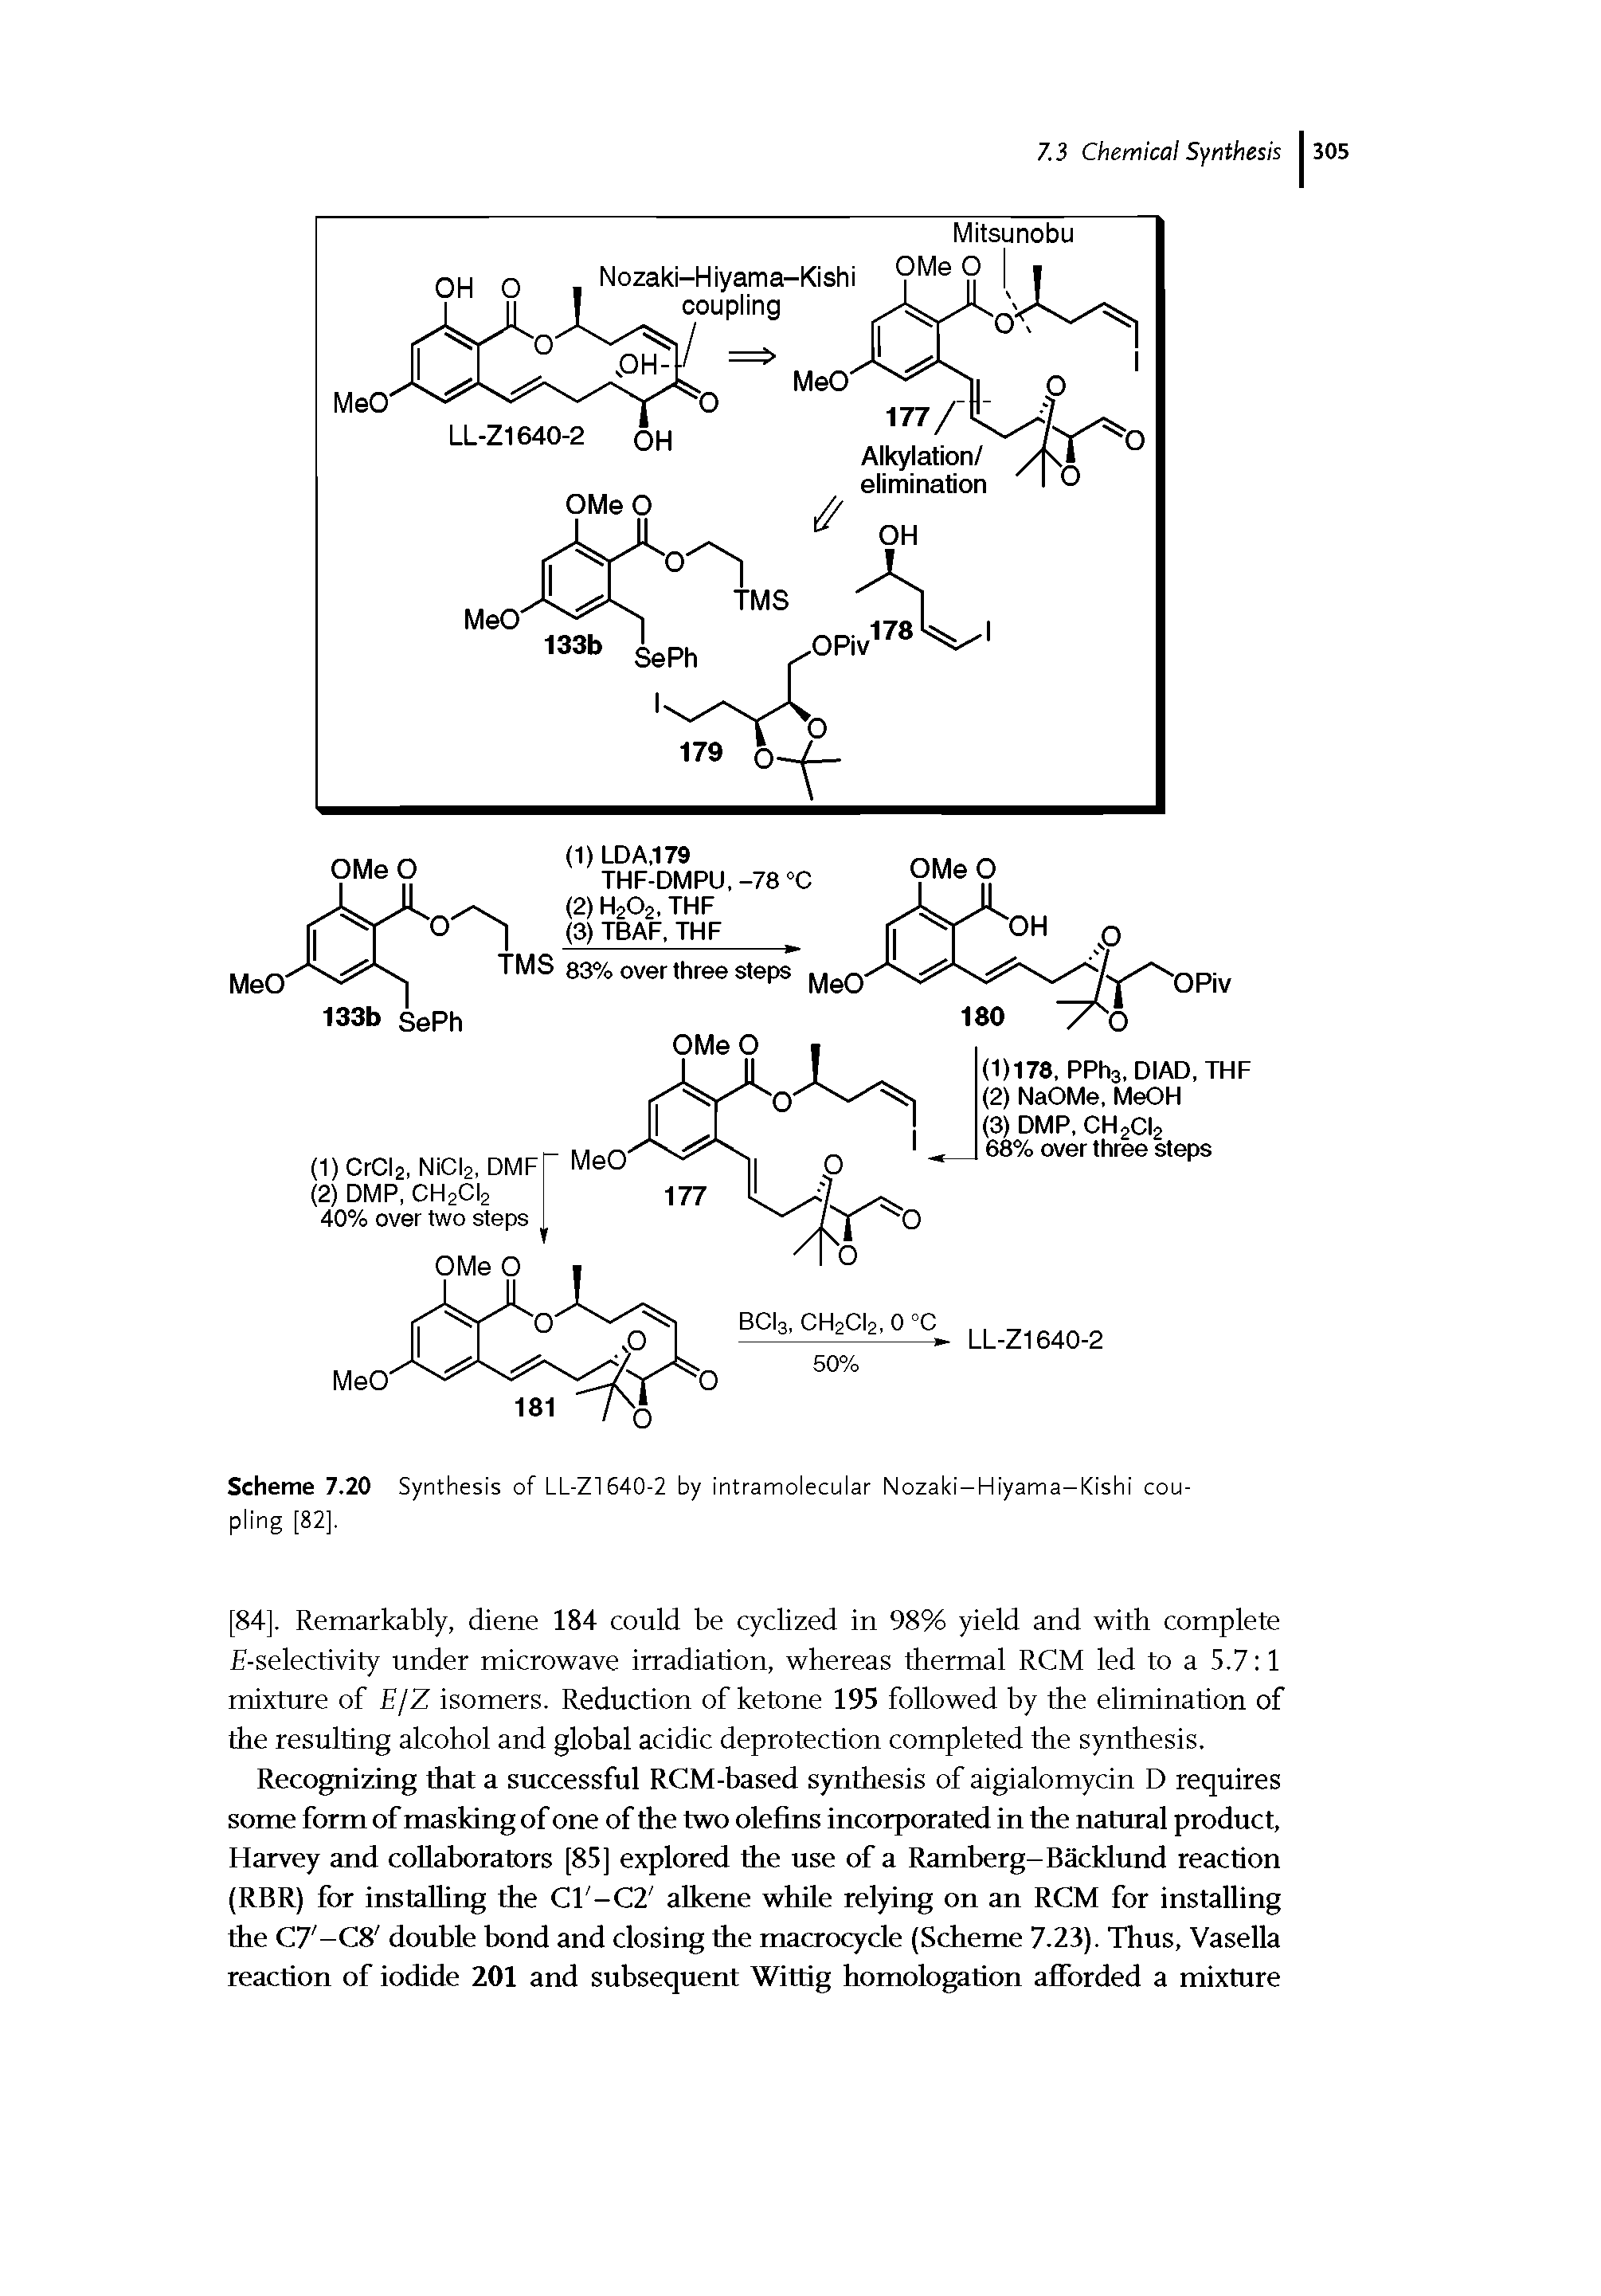 Scheme 7.20 Synthesis of LL-Z1540-2 by intramolecular Nozaki-Hiyama-Kishi coupling [82].